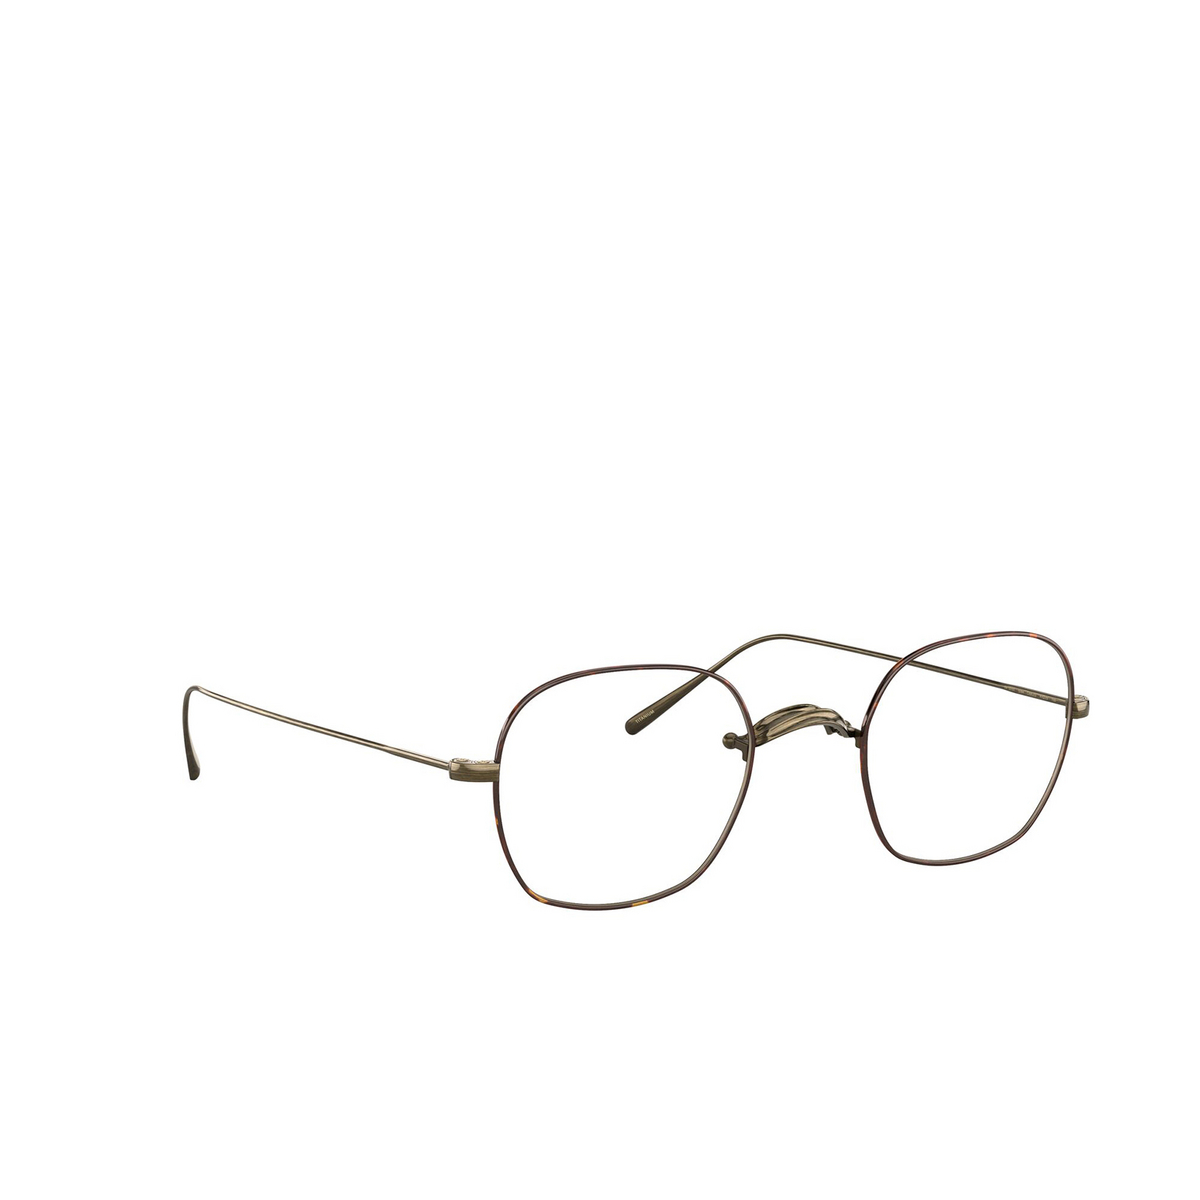 Oliver Peoples® Square Eyeglasses: Carles OV1270T color Antique Gold / Dtbk 5284 - three-quarters view.